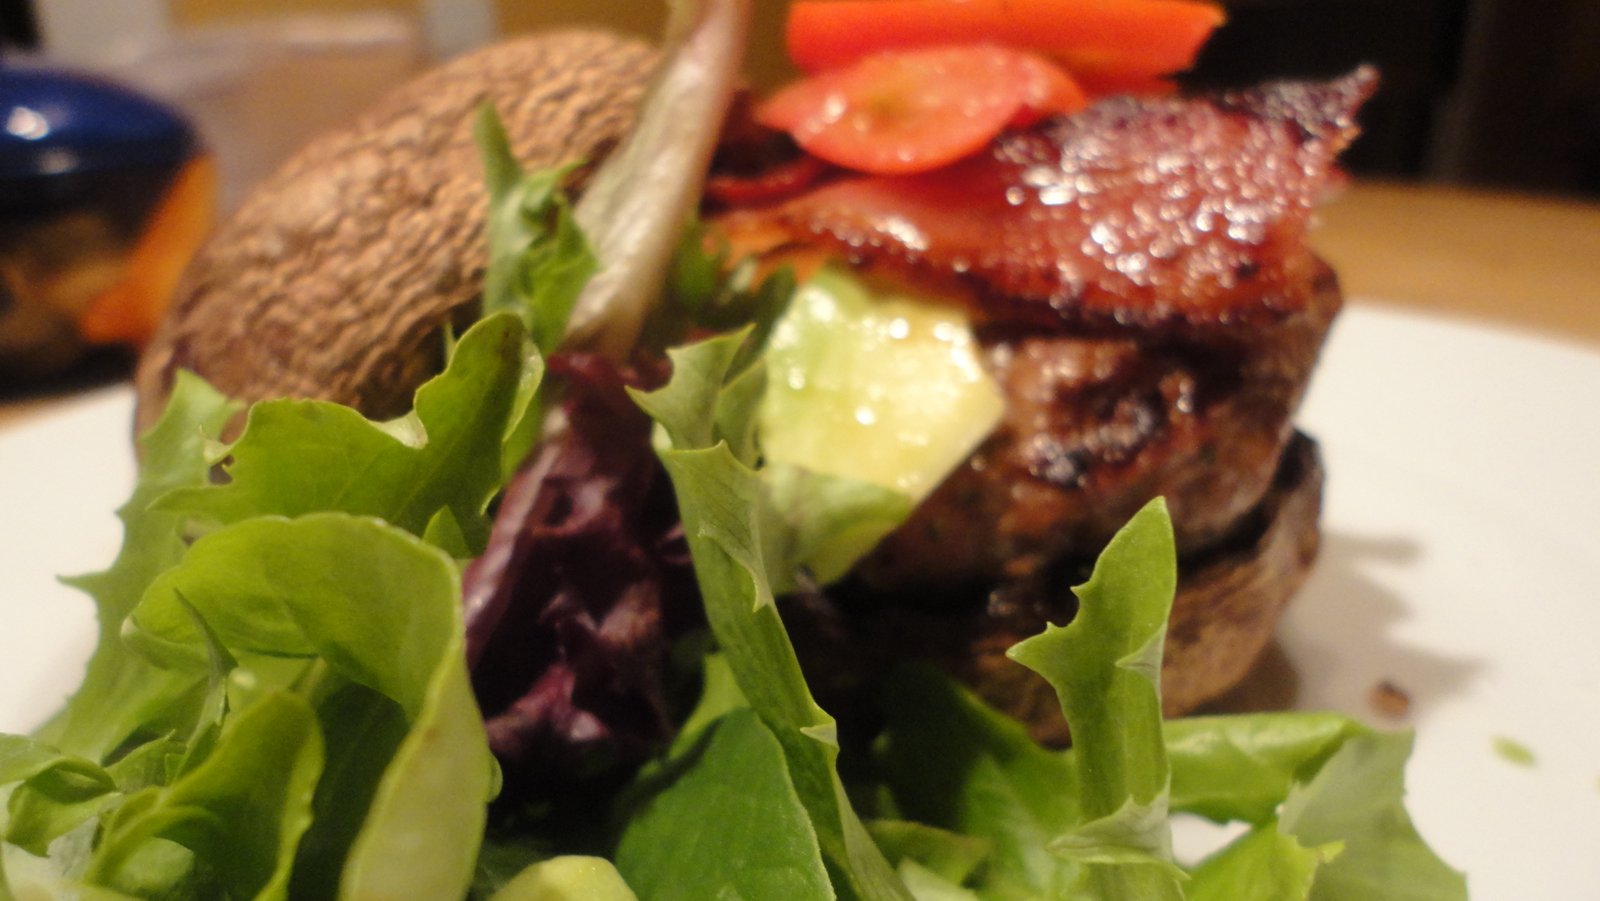 Recipe #11 | All Meat No Wheat Tasty-Licious Paleo Burger